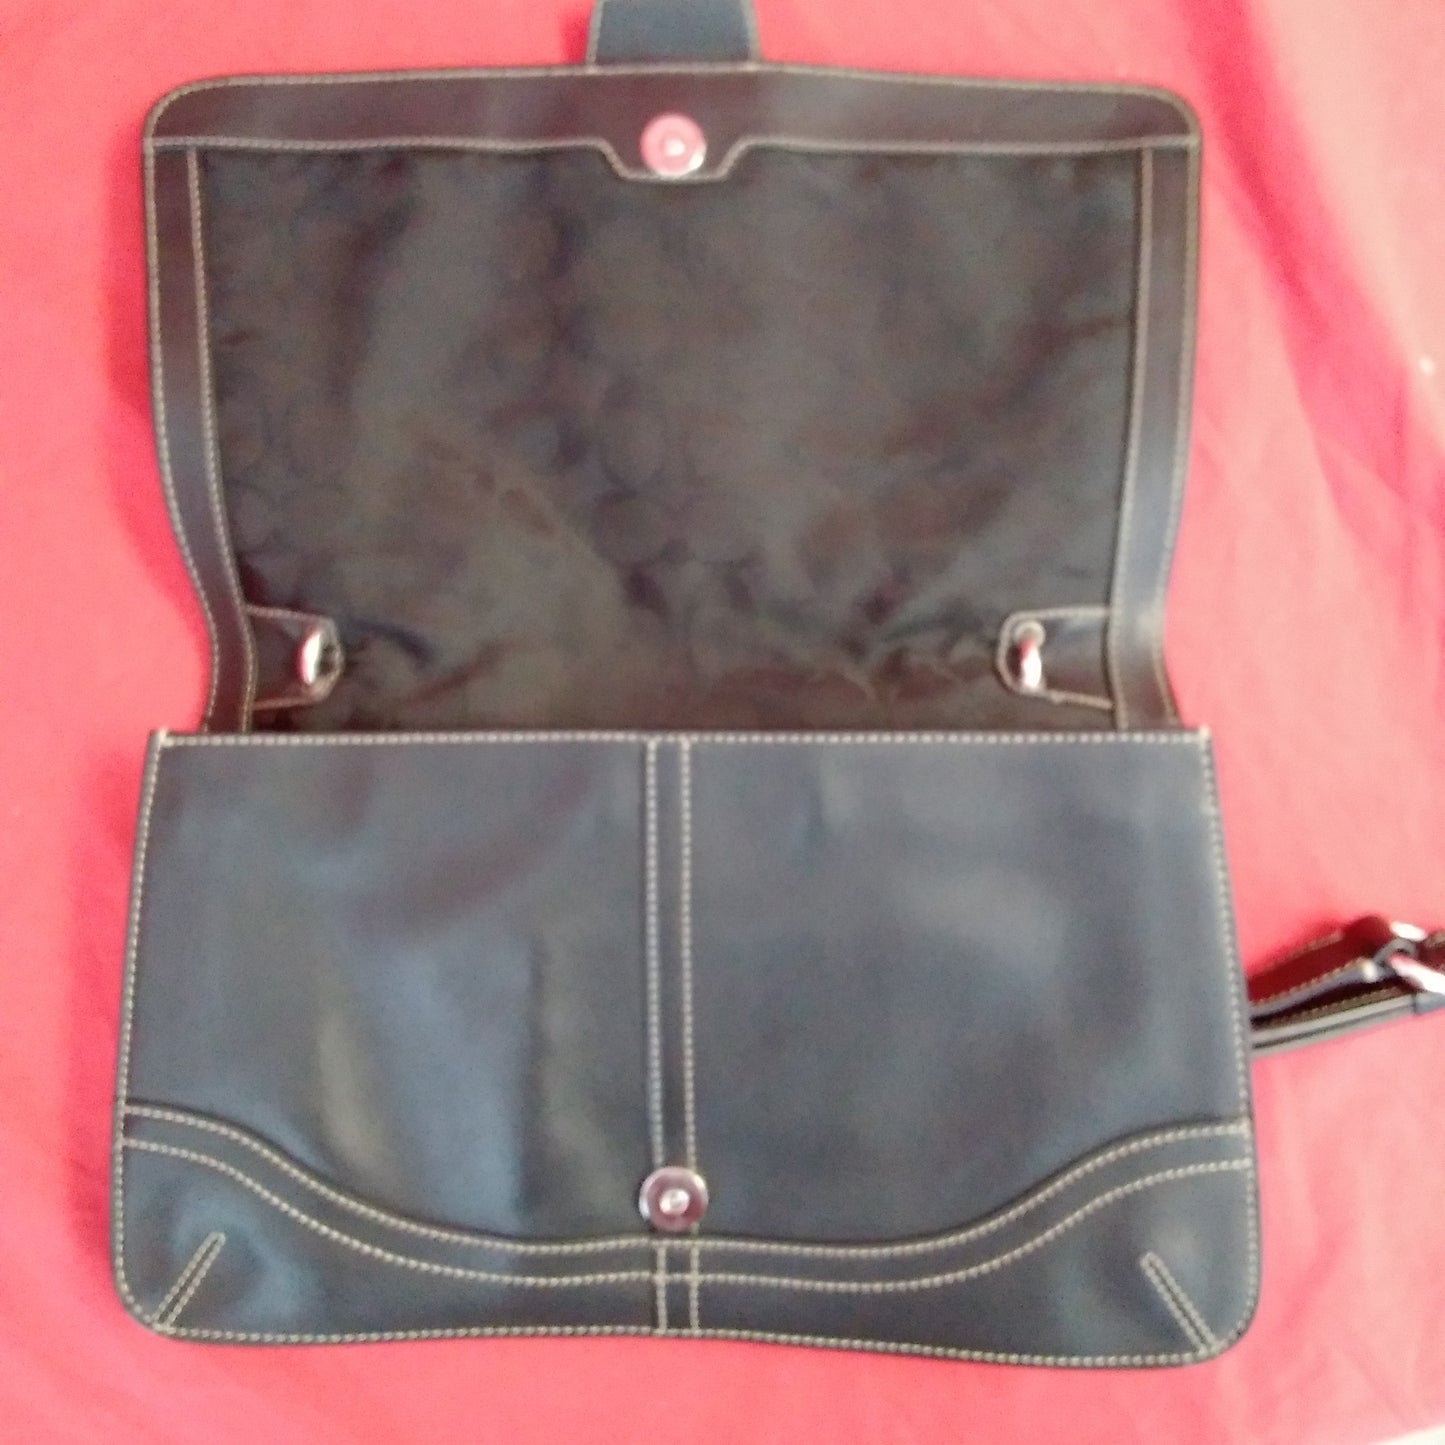 Coach 9741 Black Leather Soho Shoulder Bag with Flap & Snap Closure